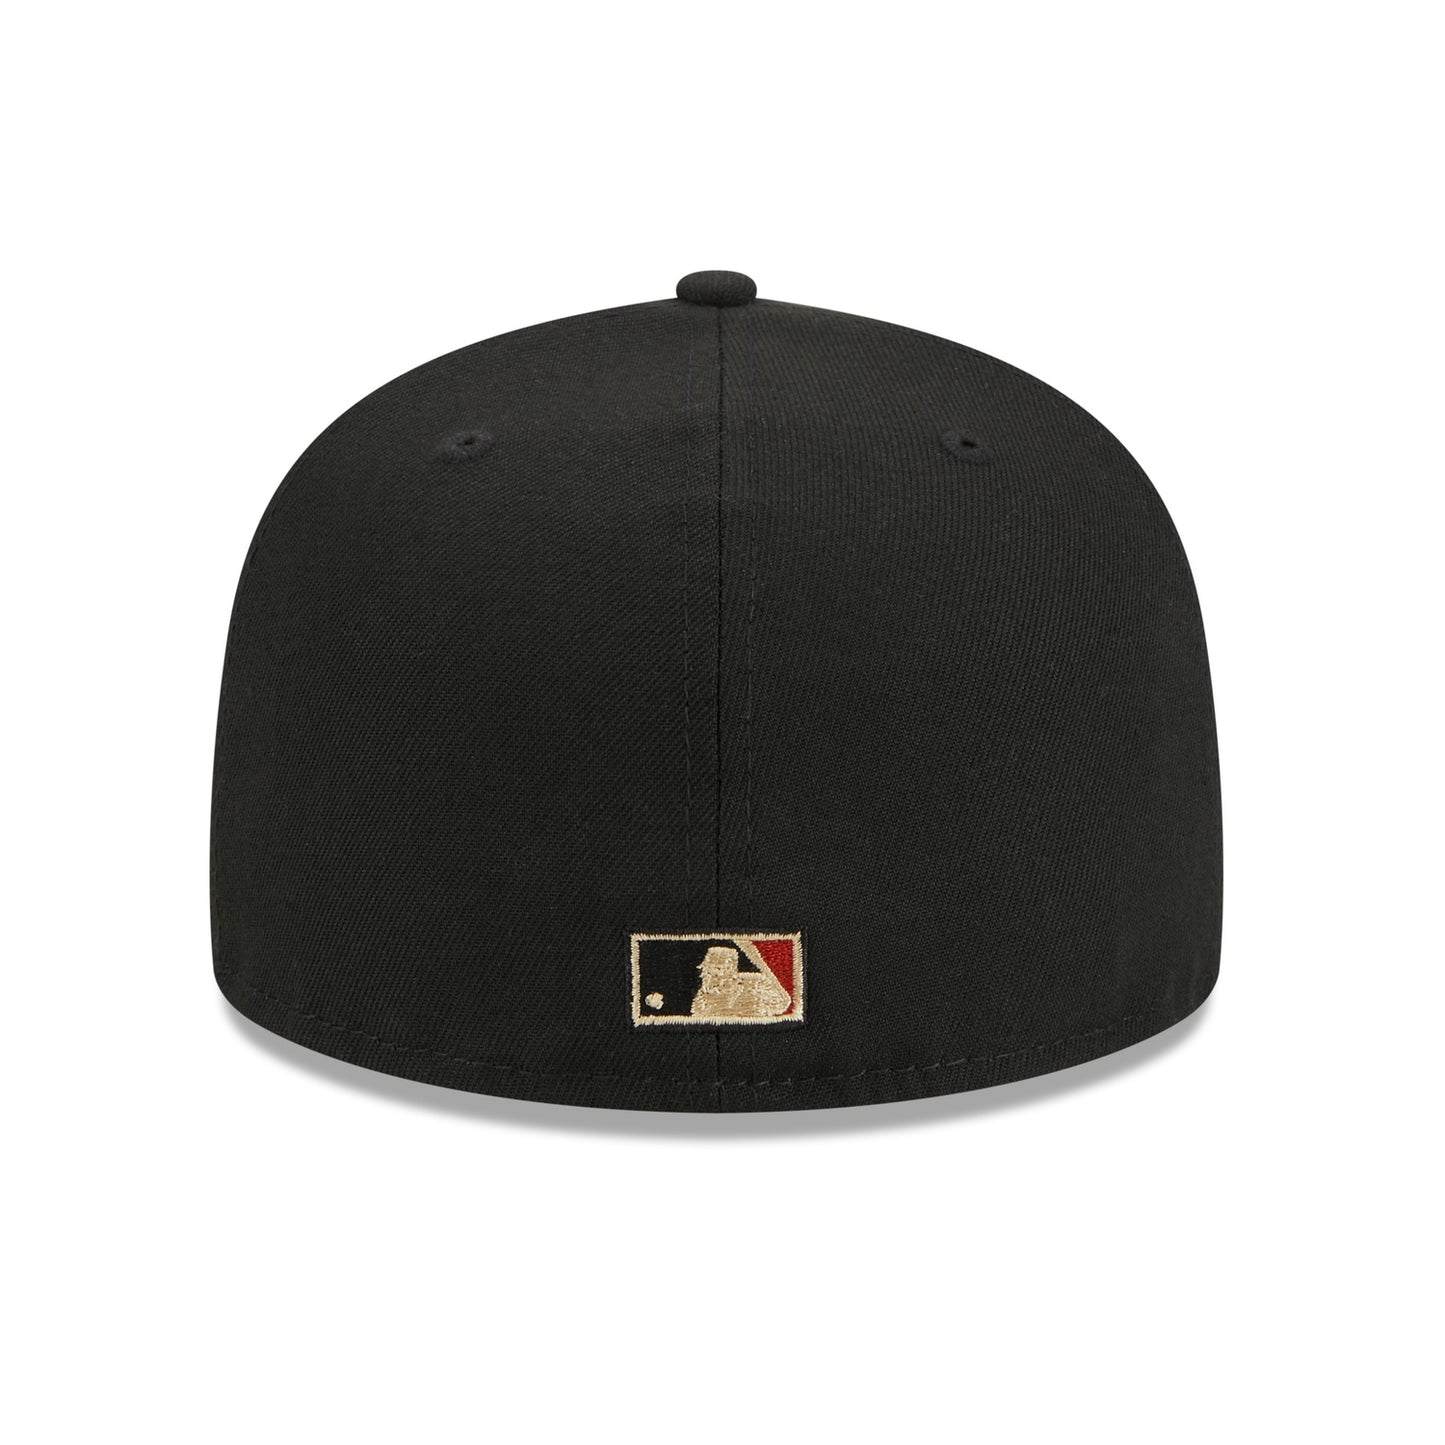 NEW ERA 59FIFTY MLB HOUSTON ASTROS 45TH ANNIVERSARY BLACK / GREEN UV FITTED CAP